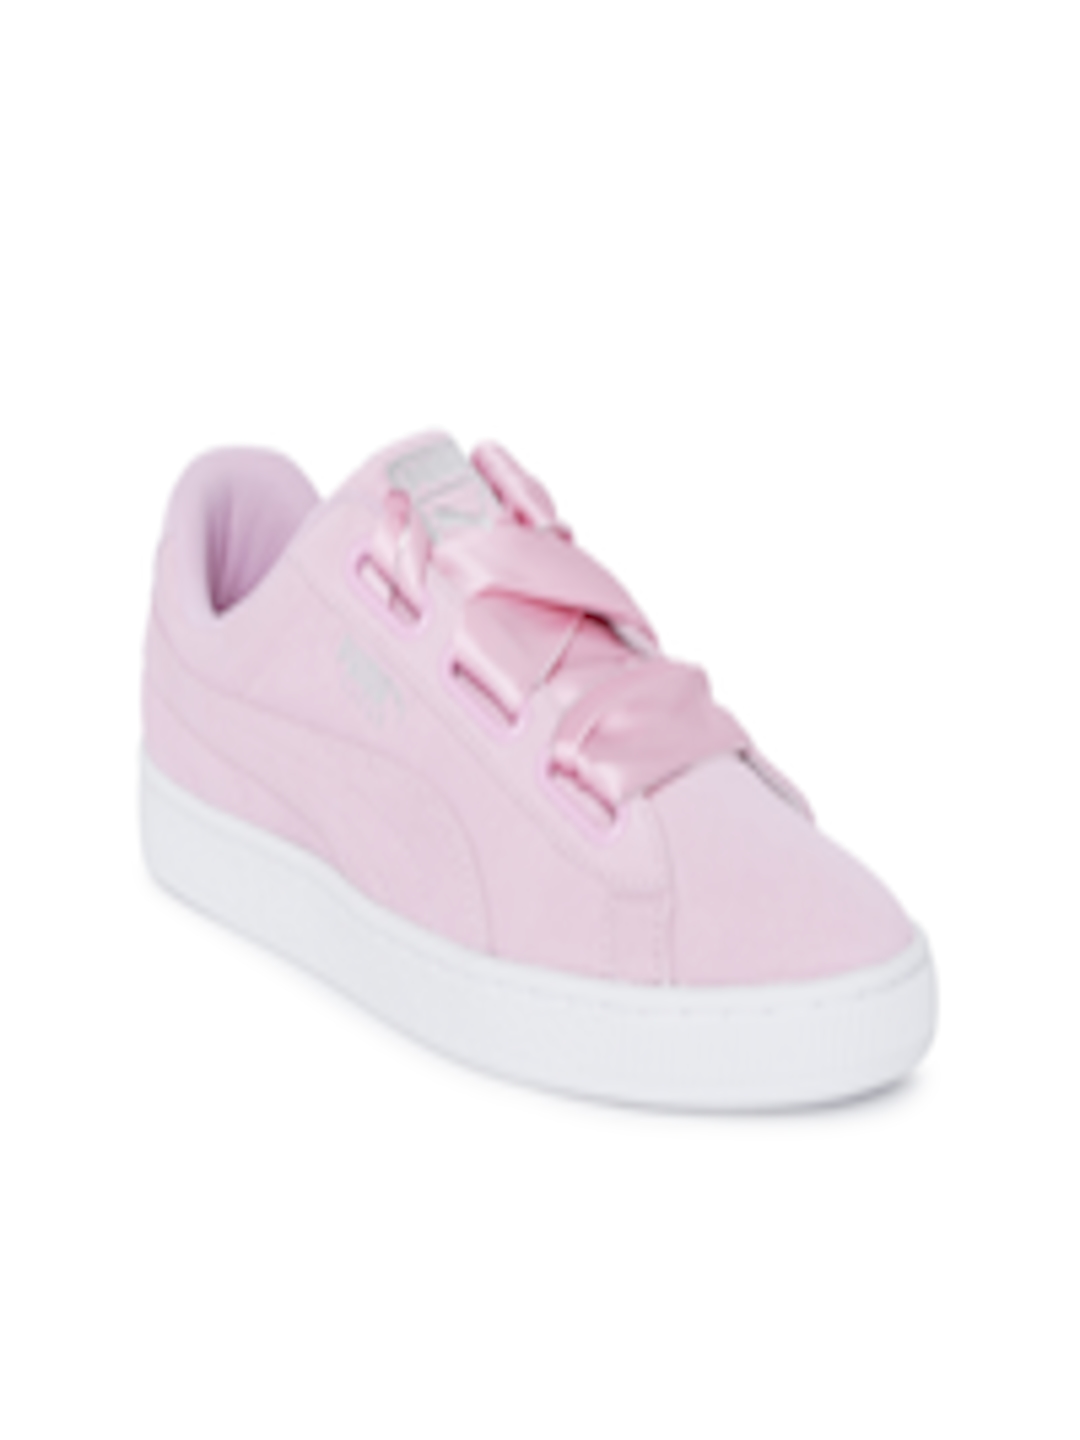 Buy Puma Women Pink Suede Heart Galaxy Suede Sneakers - Casual Shoes ...